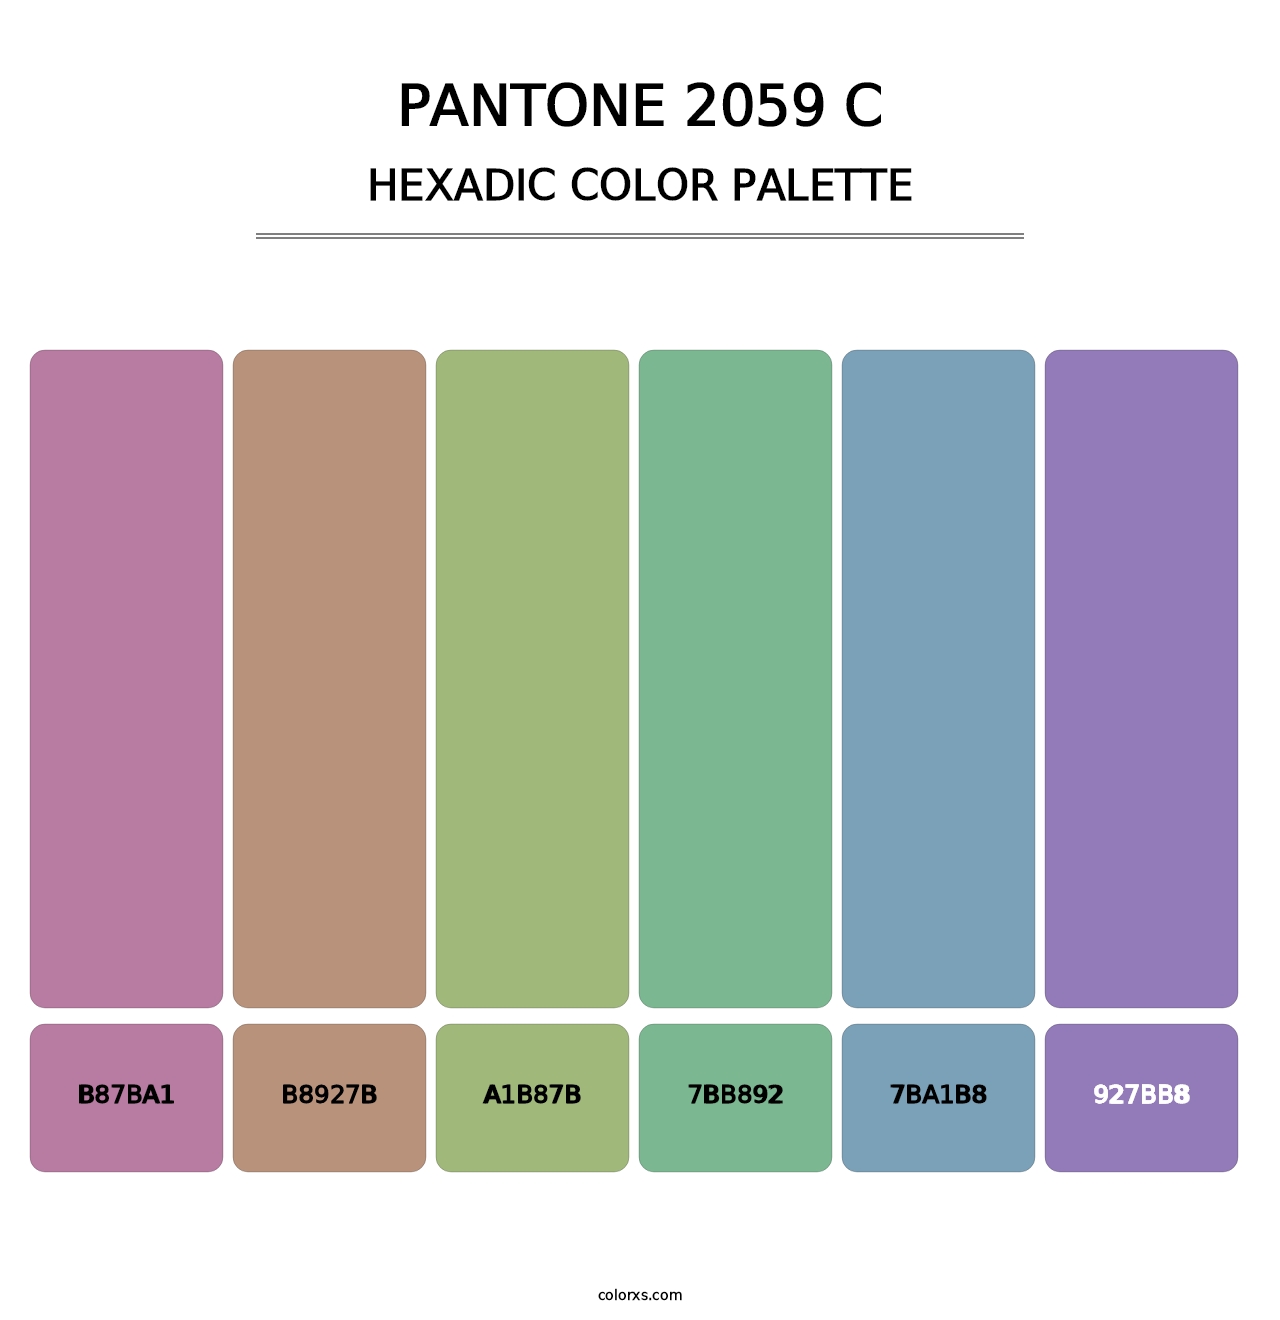 PANTONE 2059 C - Hexadic Color Palette